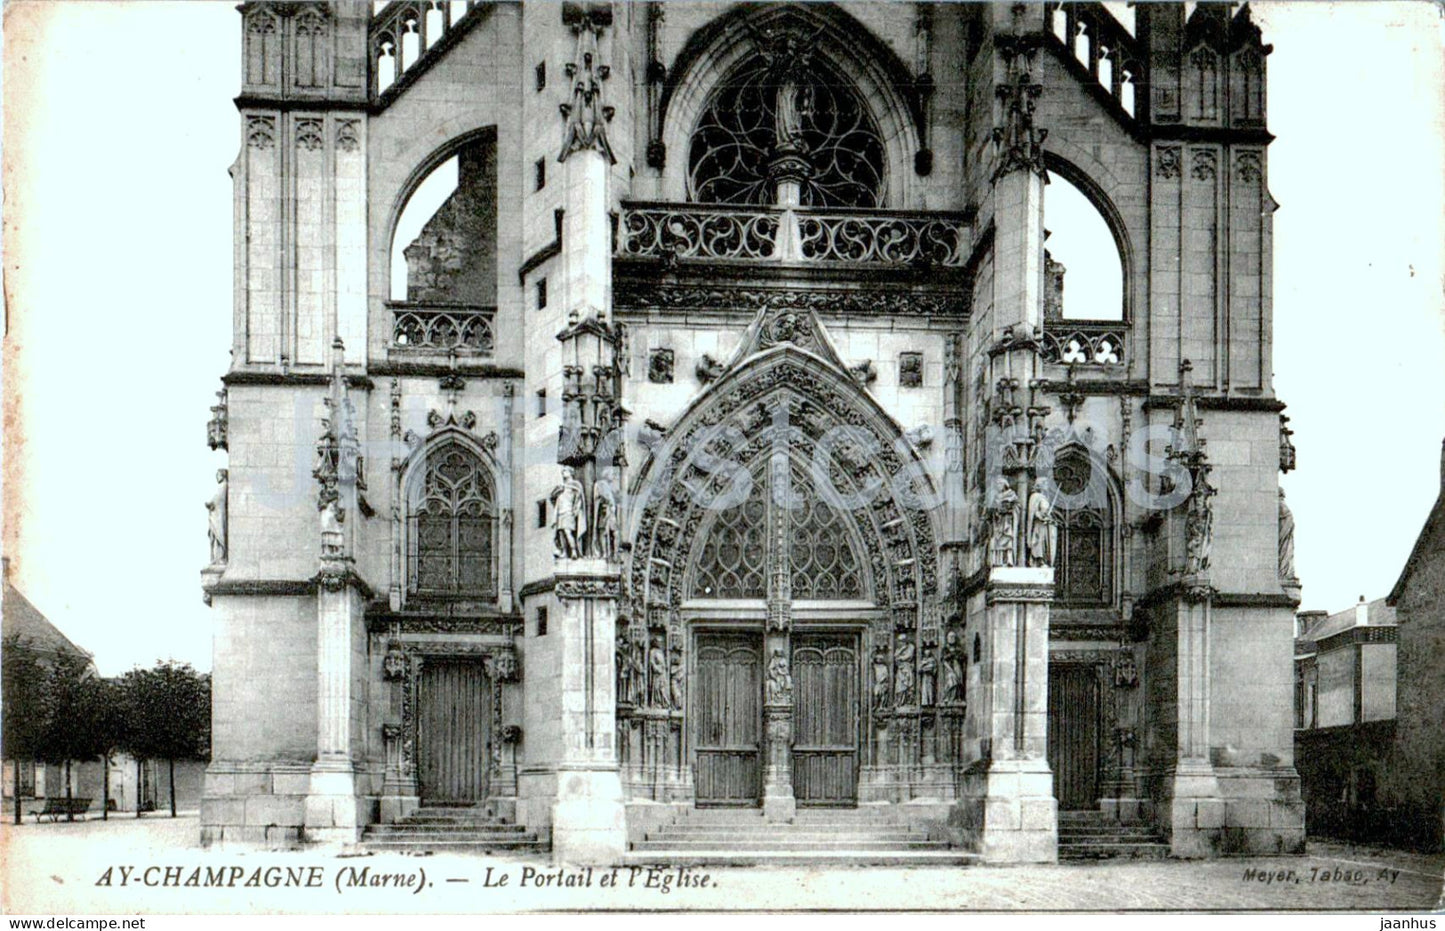 Ay Champagne - Le Portail et l'Eglise - church portal - old postcard - France - unused - JH Postcards